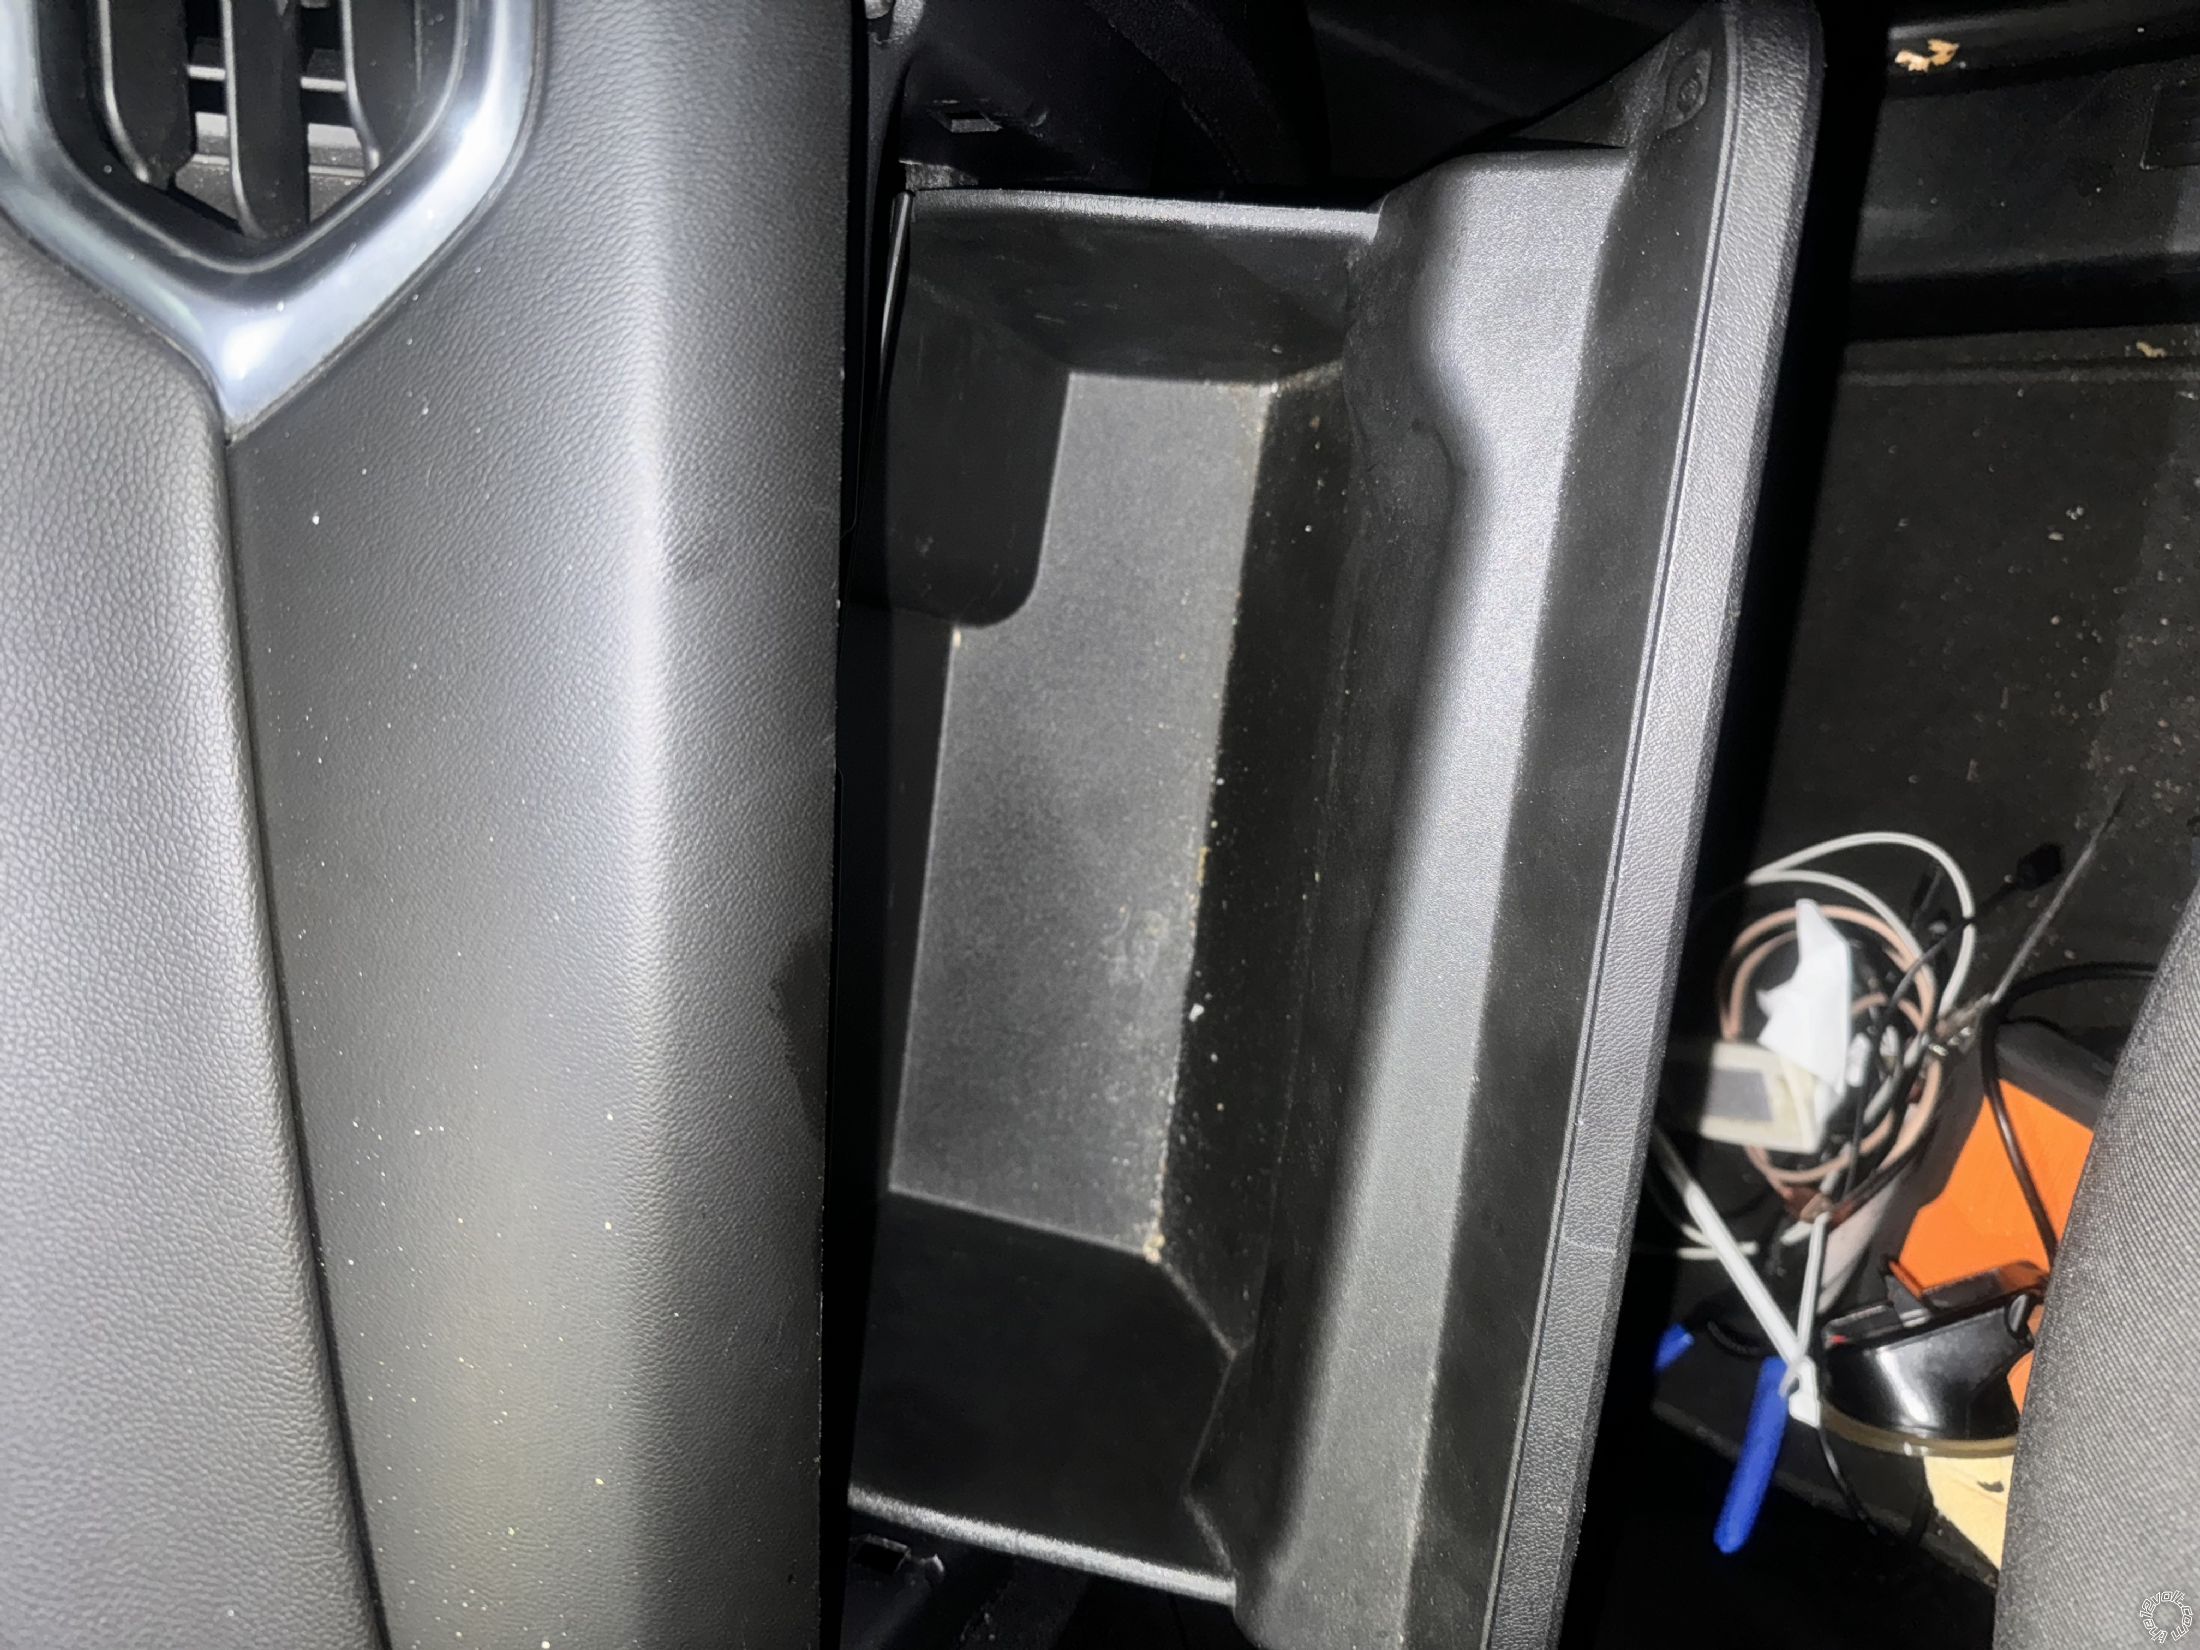 2018 Chevrolet Equinox LT, 7 Mylink Radio Wiring, No Bose - Last Post -- posted image.